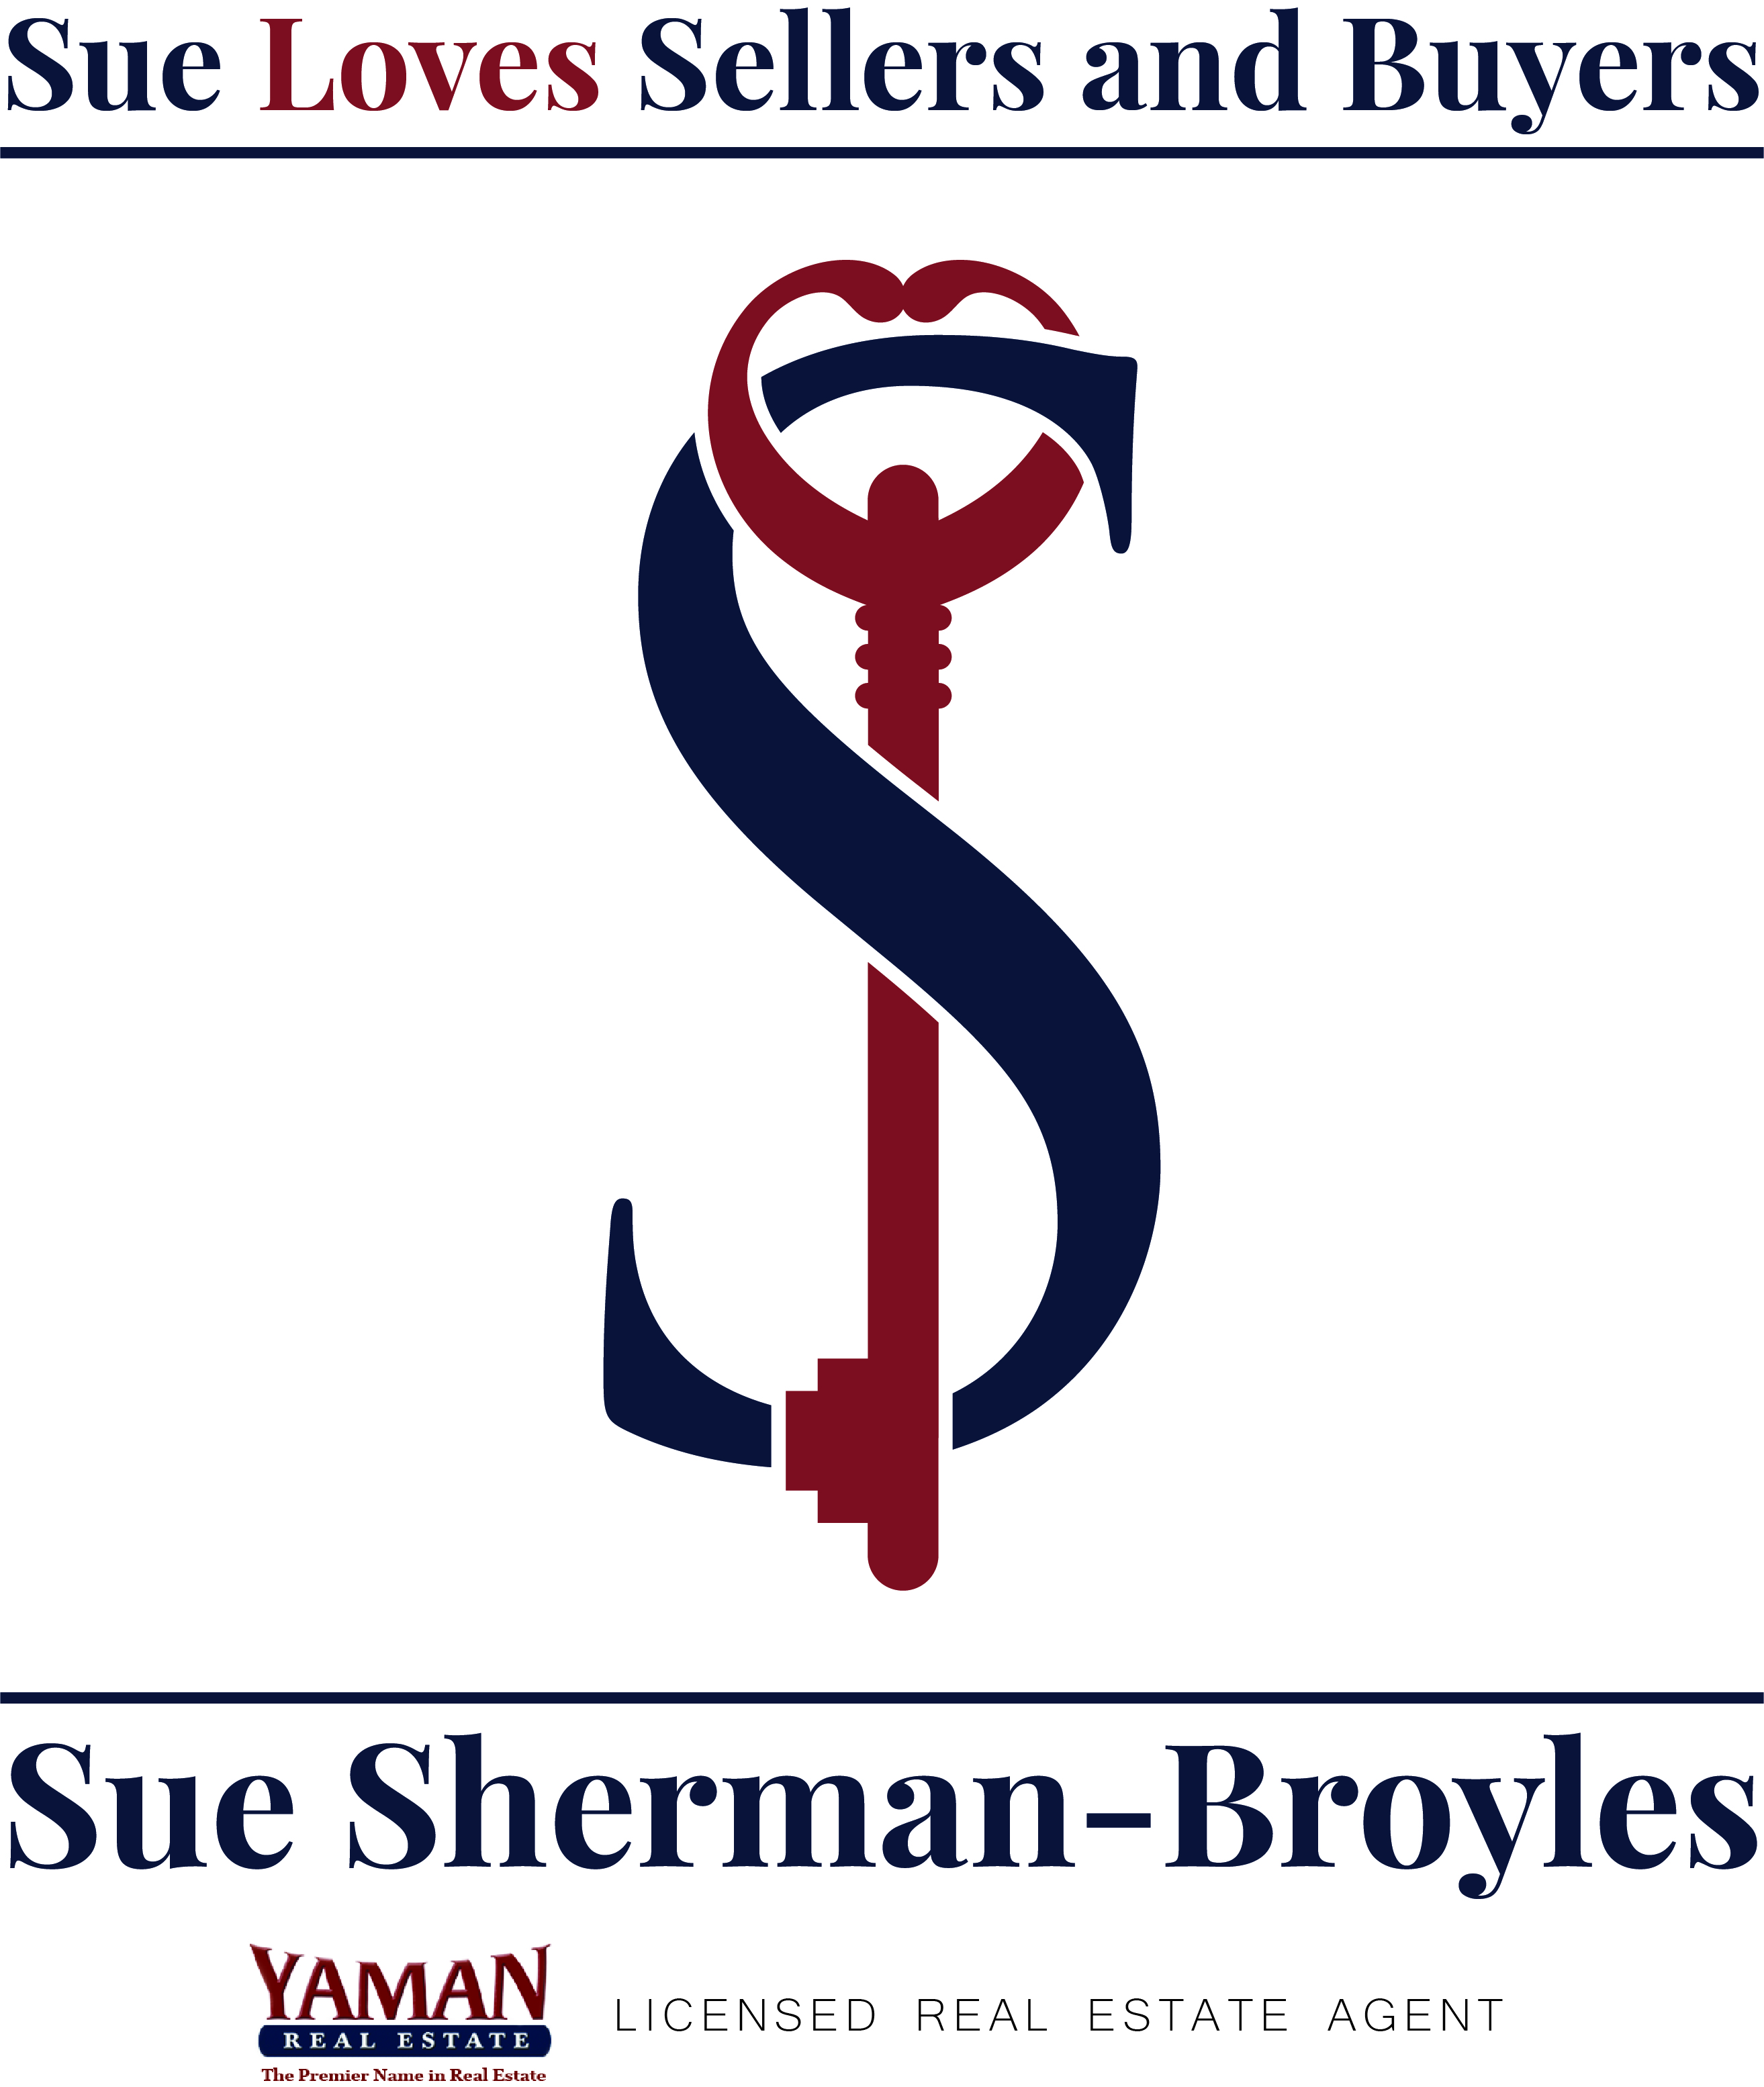 Susan Sherman-Broyles RE Broker with Yaman Real Estate